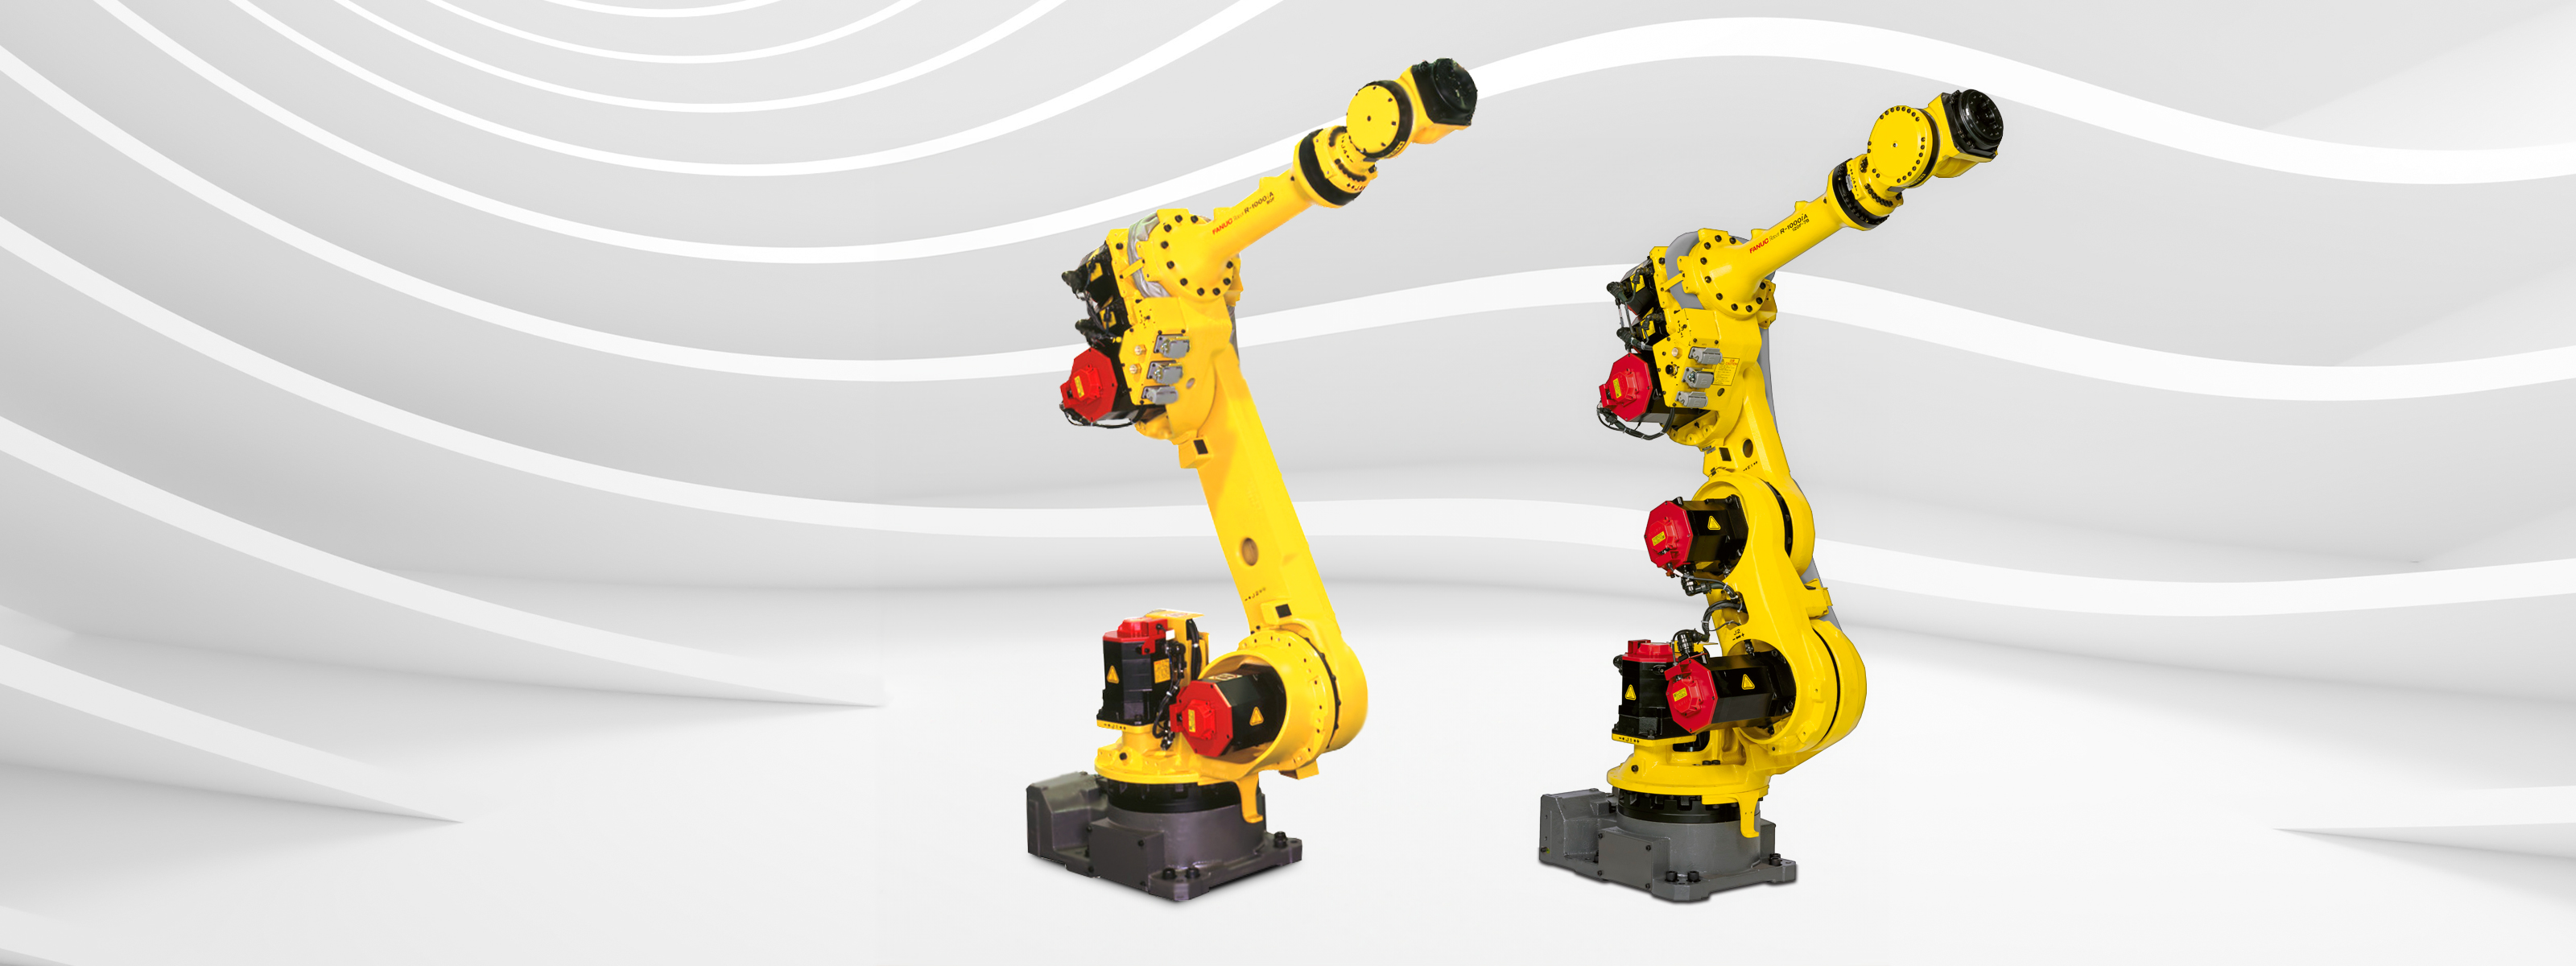 3 FANUC R-1000 industrial robots